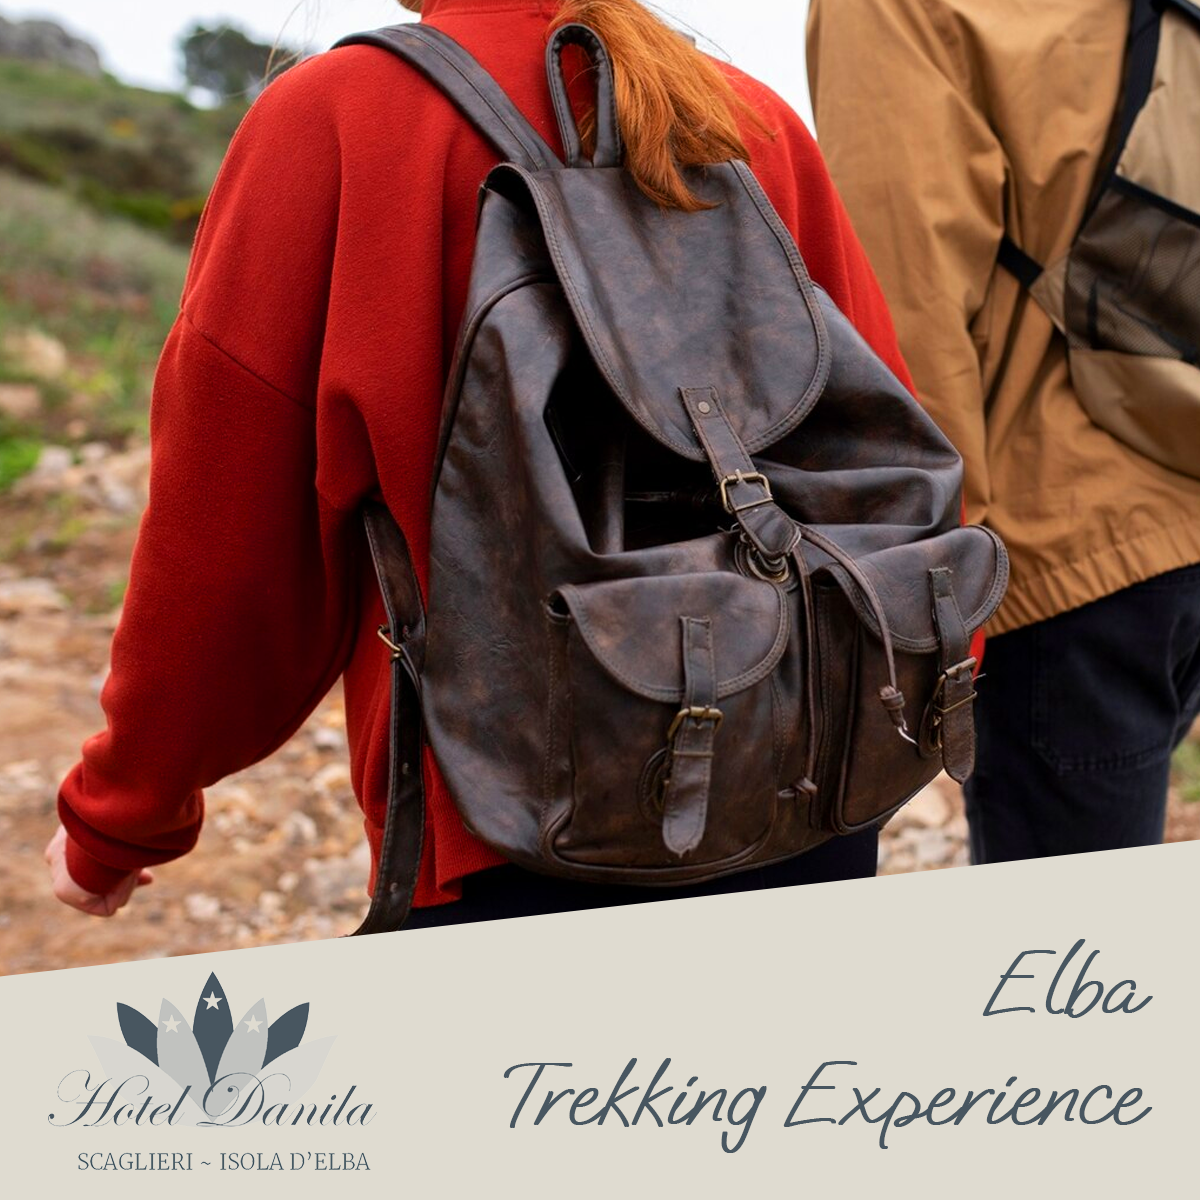 Elba Trekking Experience